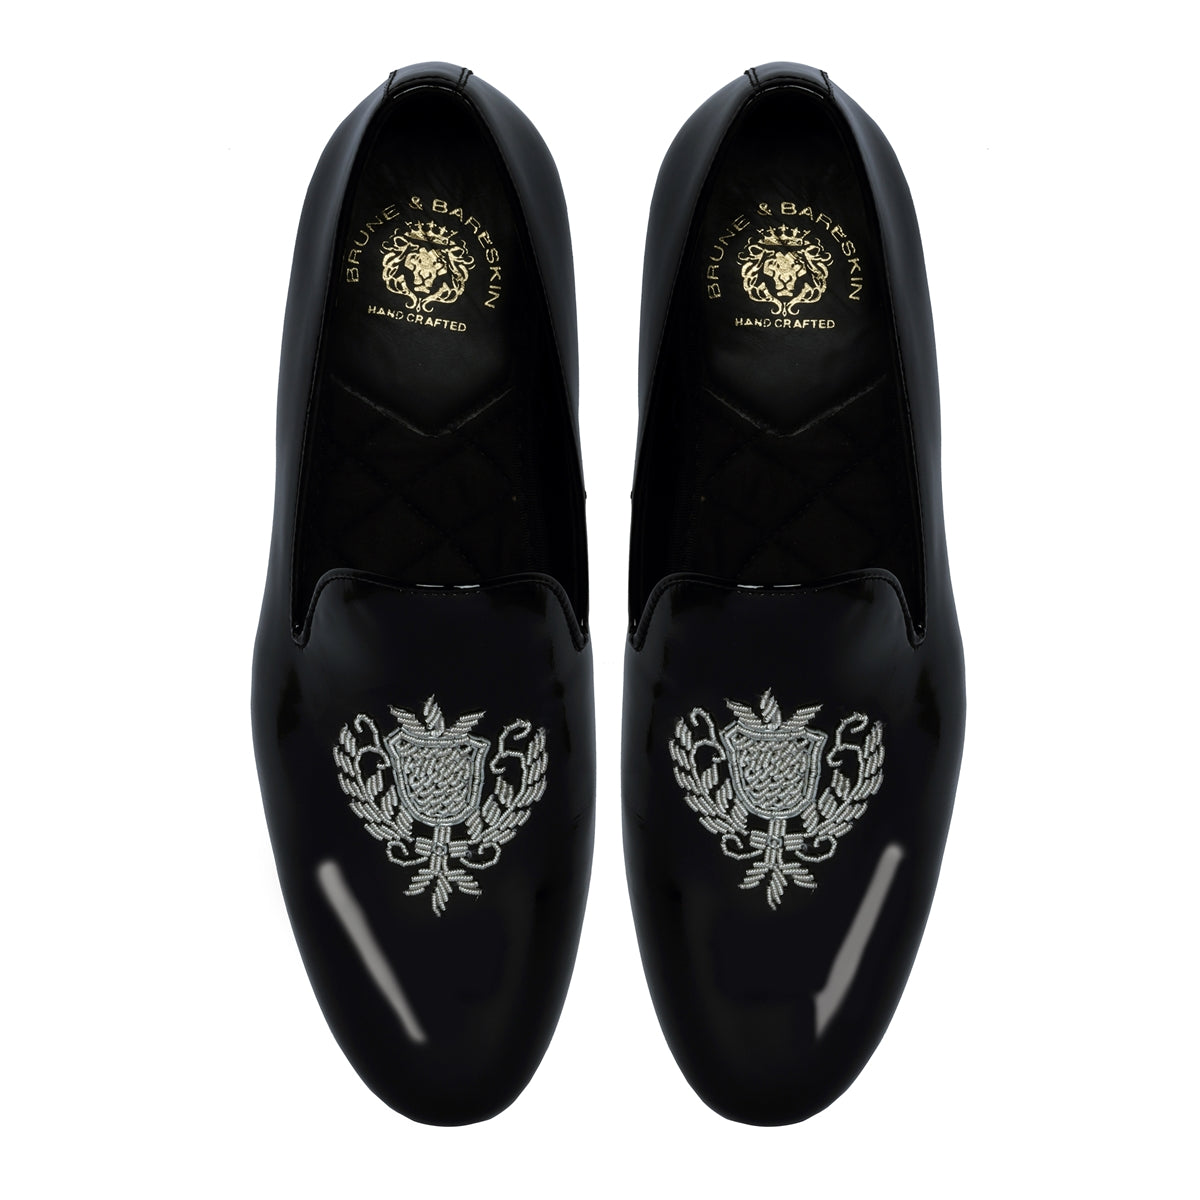 Black Patent Leather Slip-On Shoes Royal Crest Silver Zardosi For Men